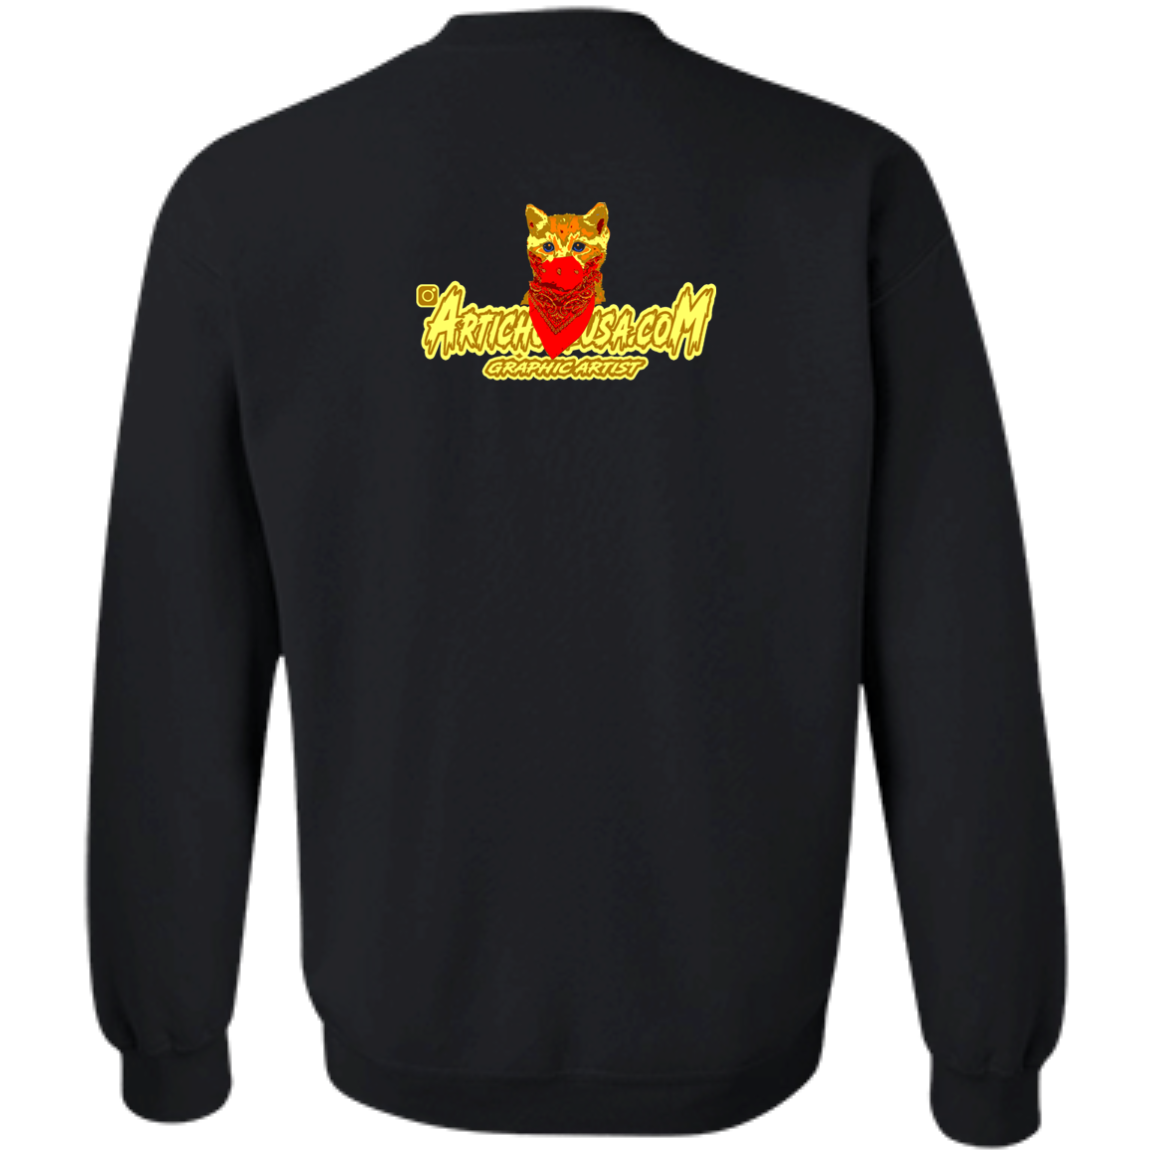 ArtichokeUSA Custom Design. You've Got To Be Kitten Me?! 2020, Not What We Expected. Crewneck Pullover Sweatshirt